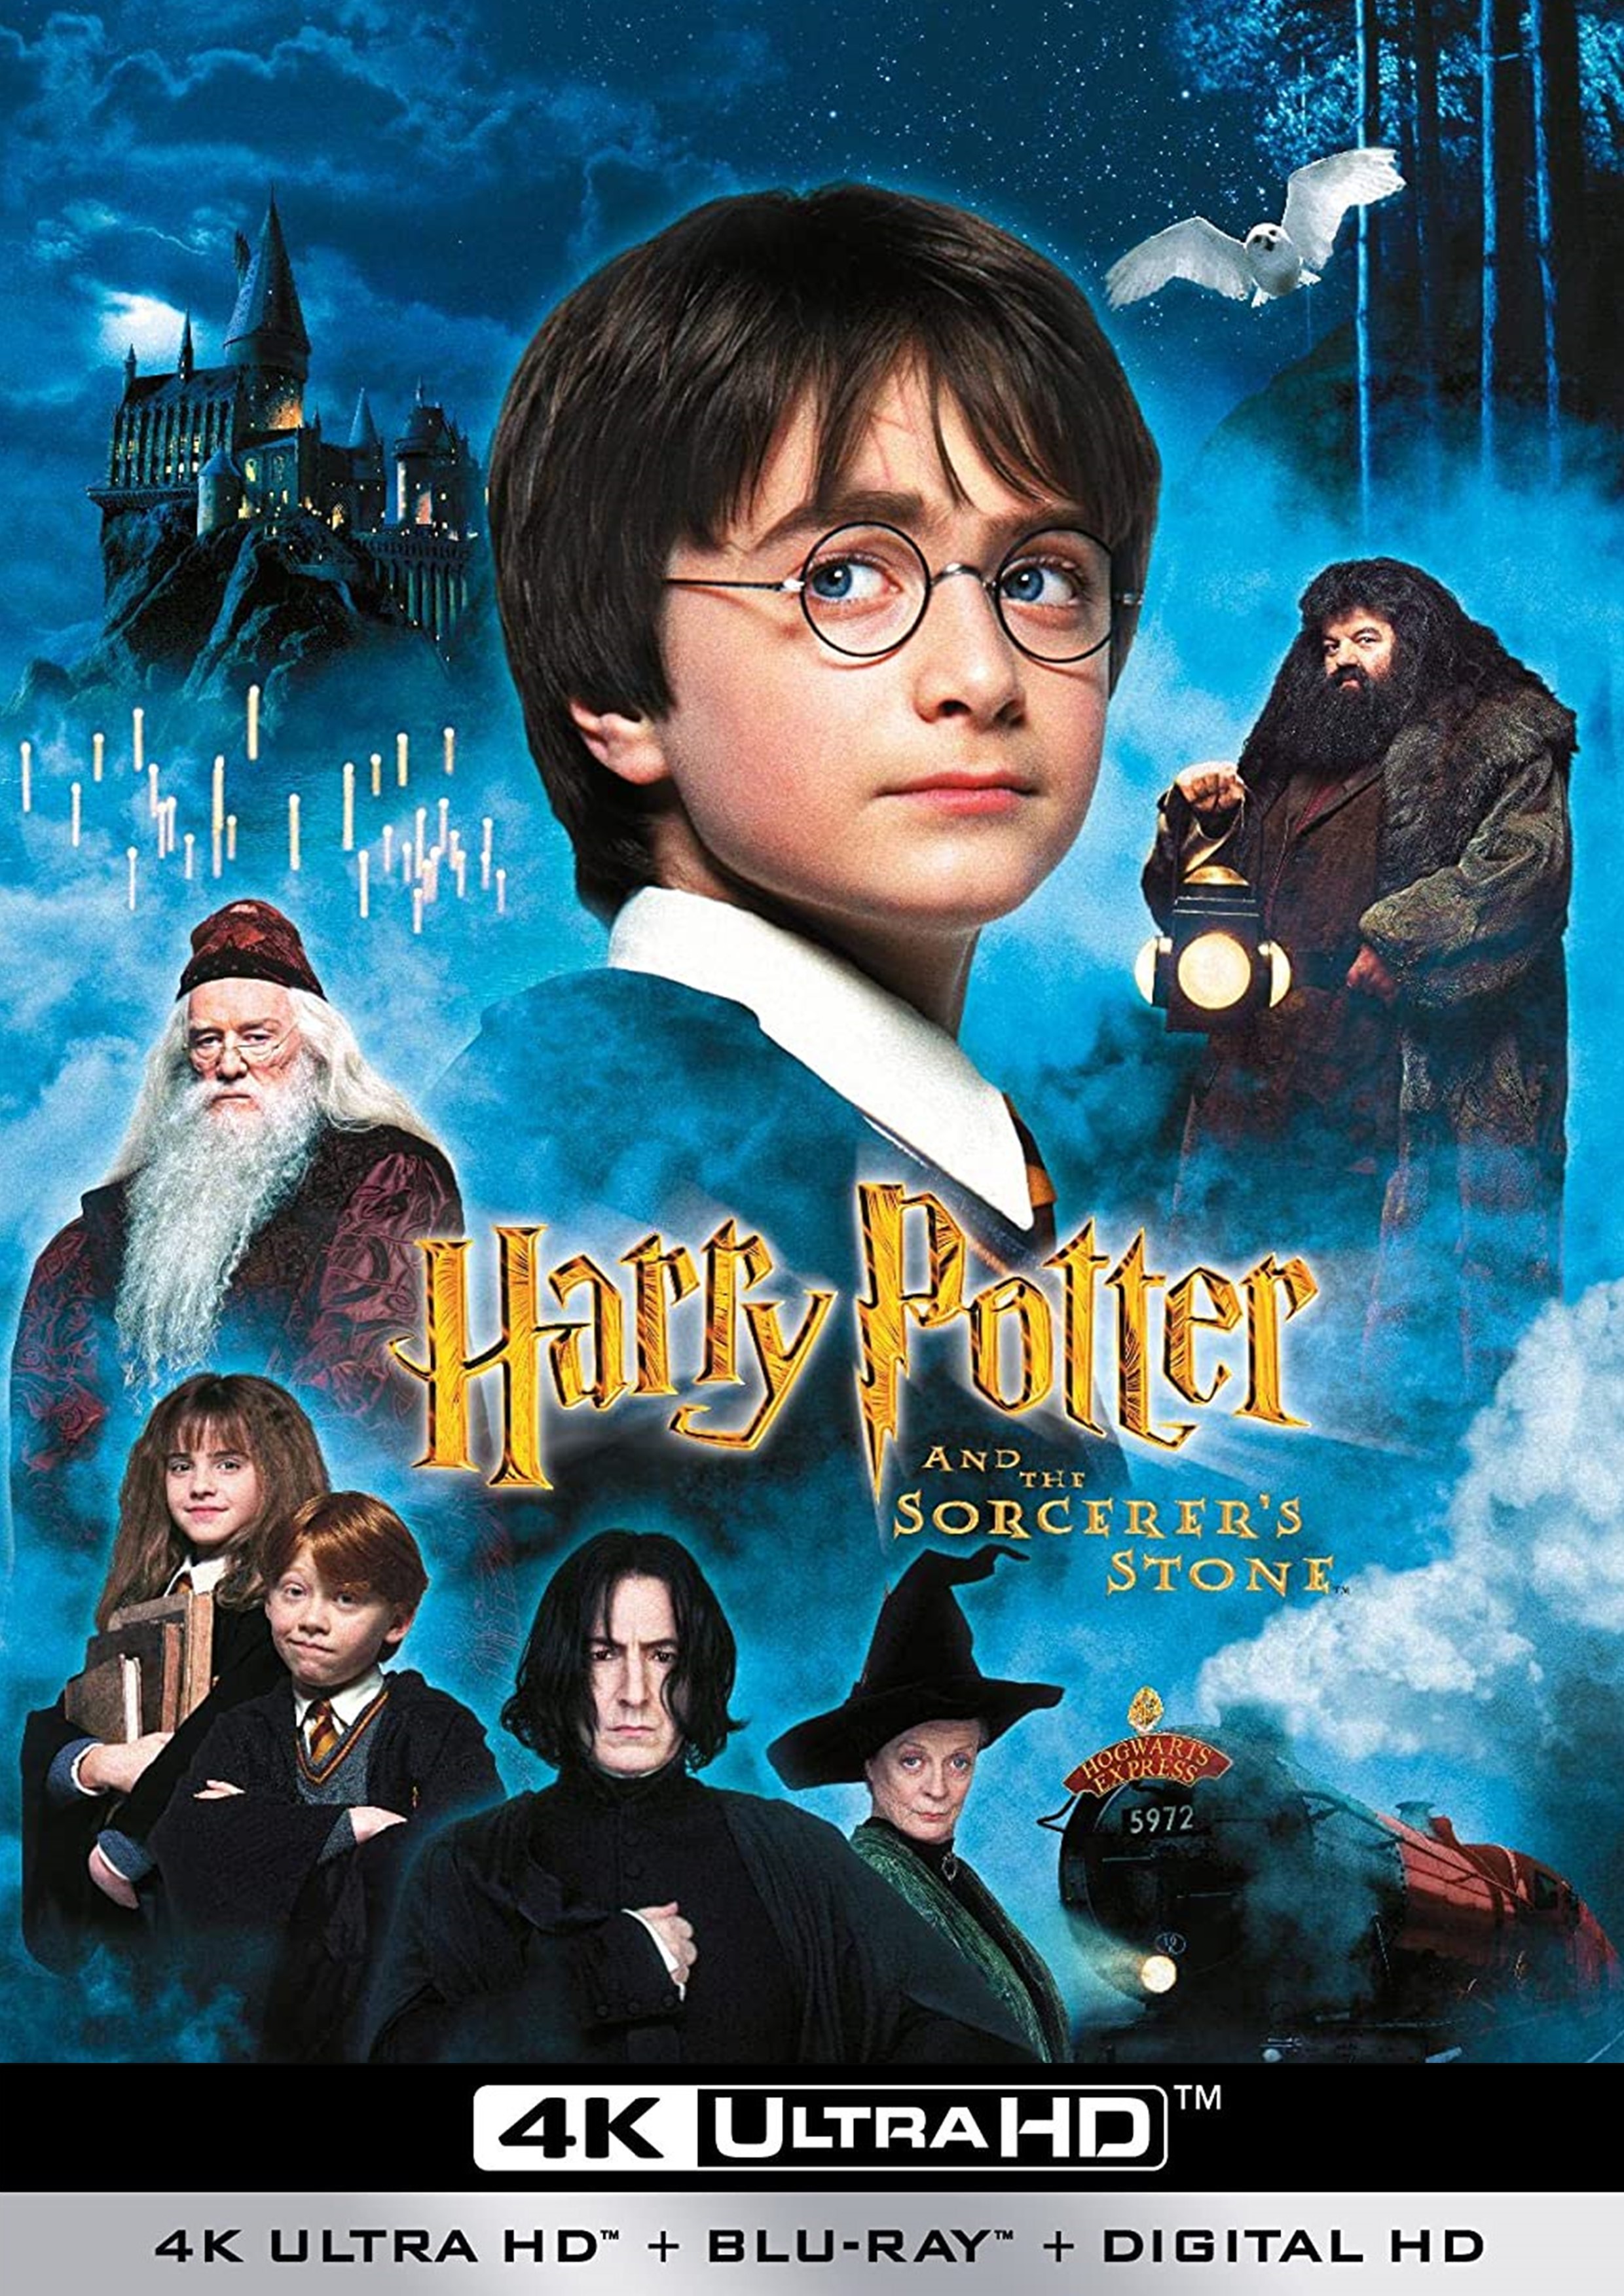 Stiahni si UHD Filmy Harry Potter a Kamen mudrcu / Harry Potter and the Sorcerer's Stone(2001)(CZ/SK/EN)(2160p 4K BRRip) = CSFD 79%